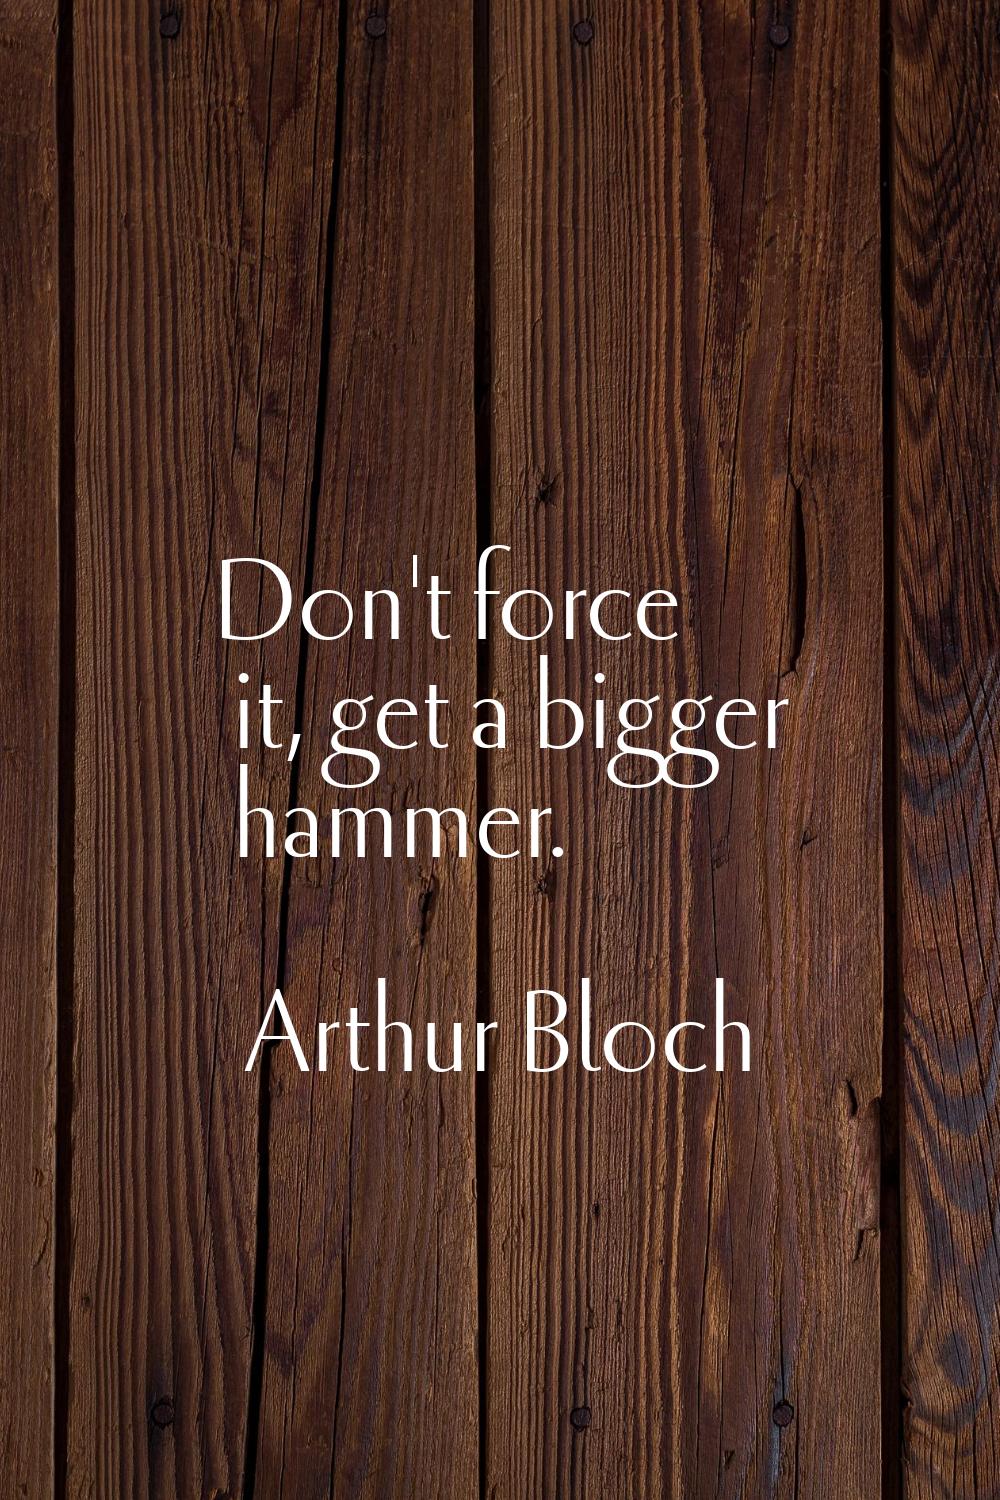 Don't force it, get a bigger hammer.